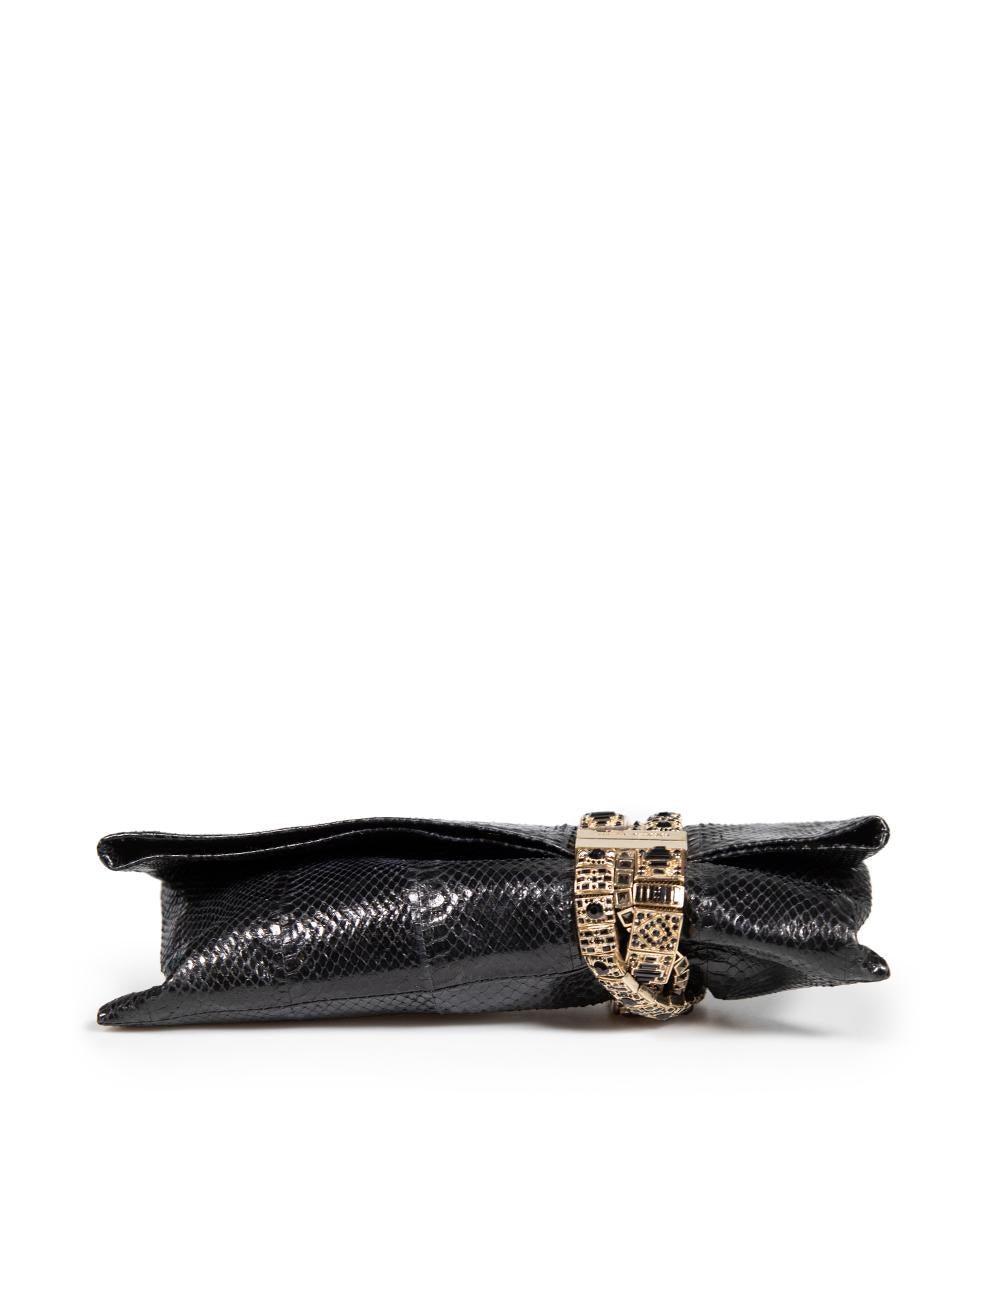 Women's Jimmy Choo Black Snakeskin Embellished Clutch For Sale